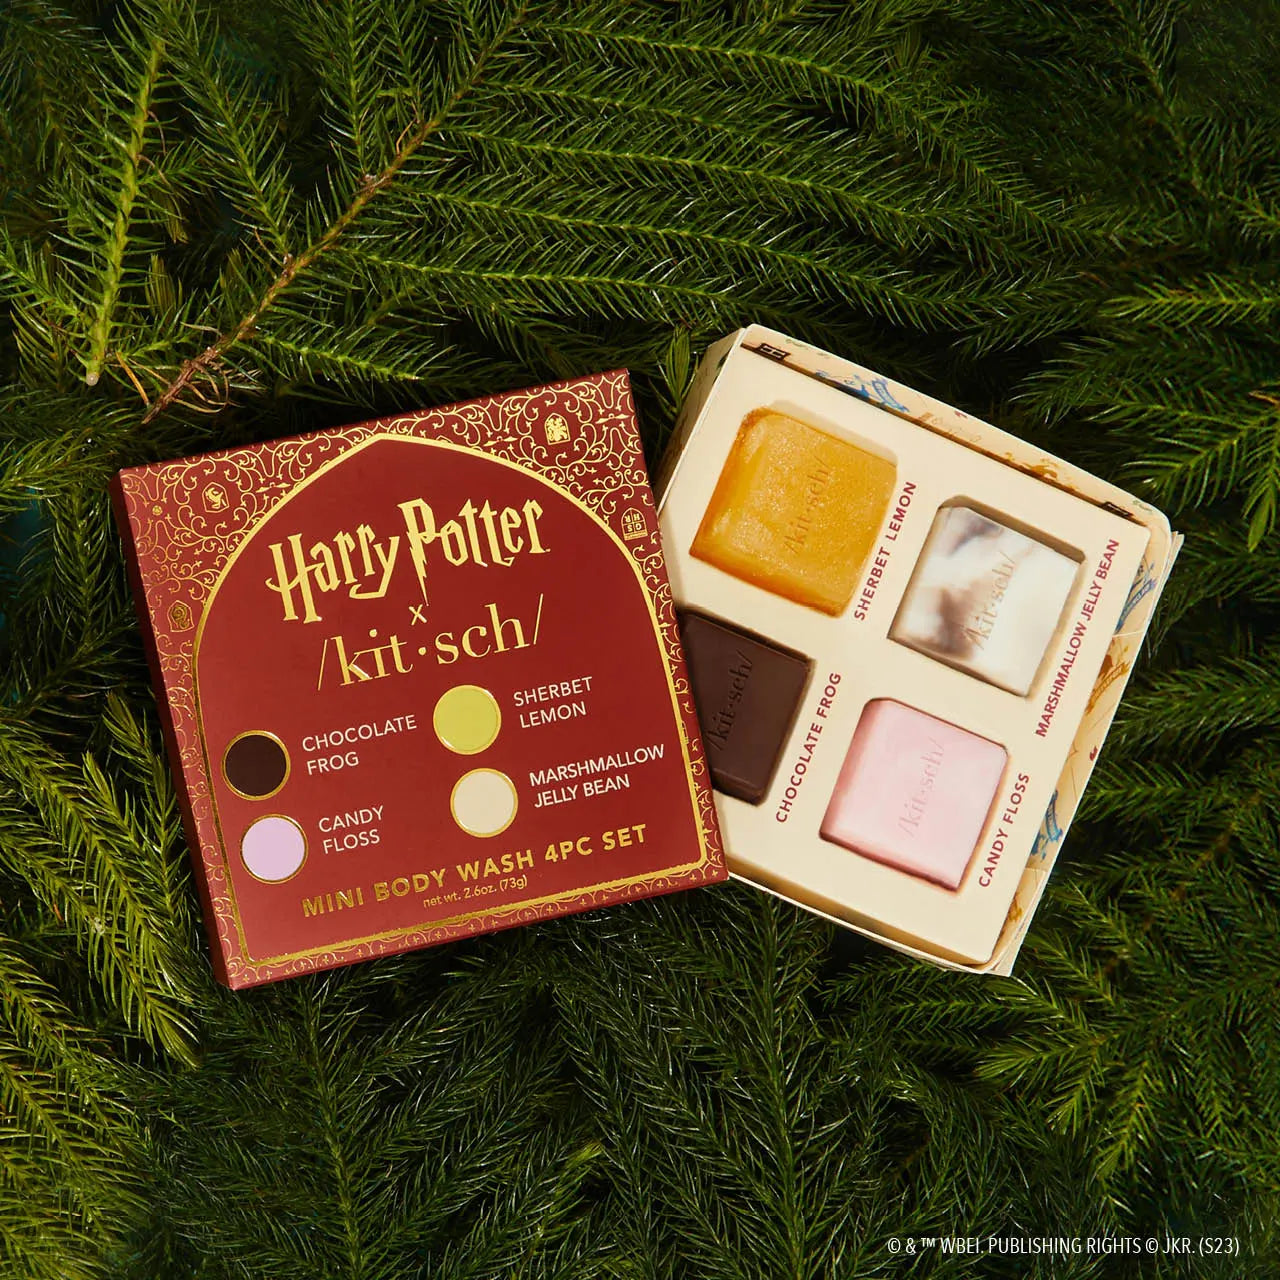 Harry Potter x Kitsch Body Wash 4pc Set